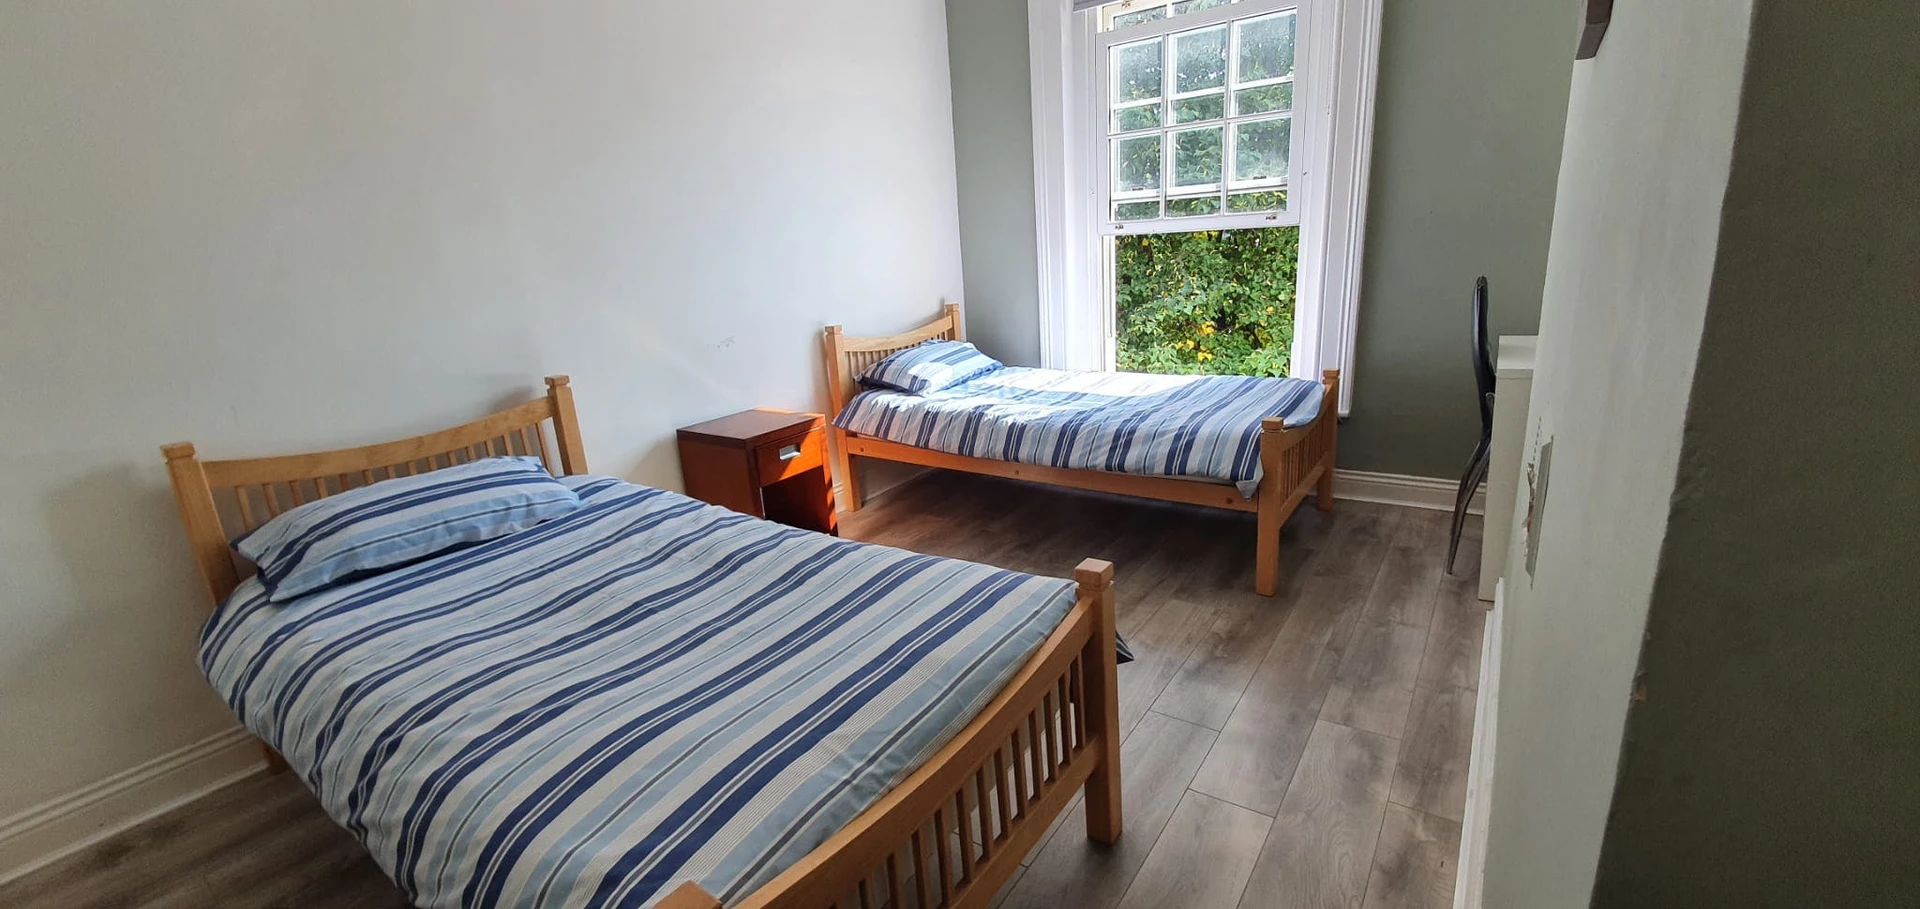 Cheap shared room in dublin